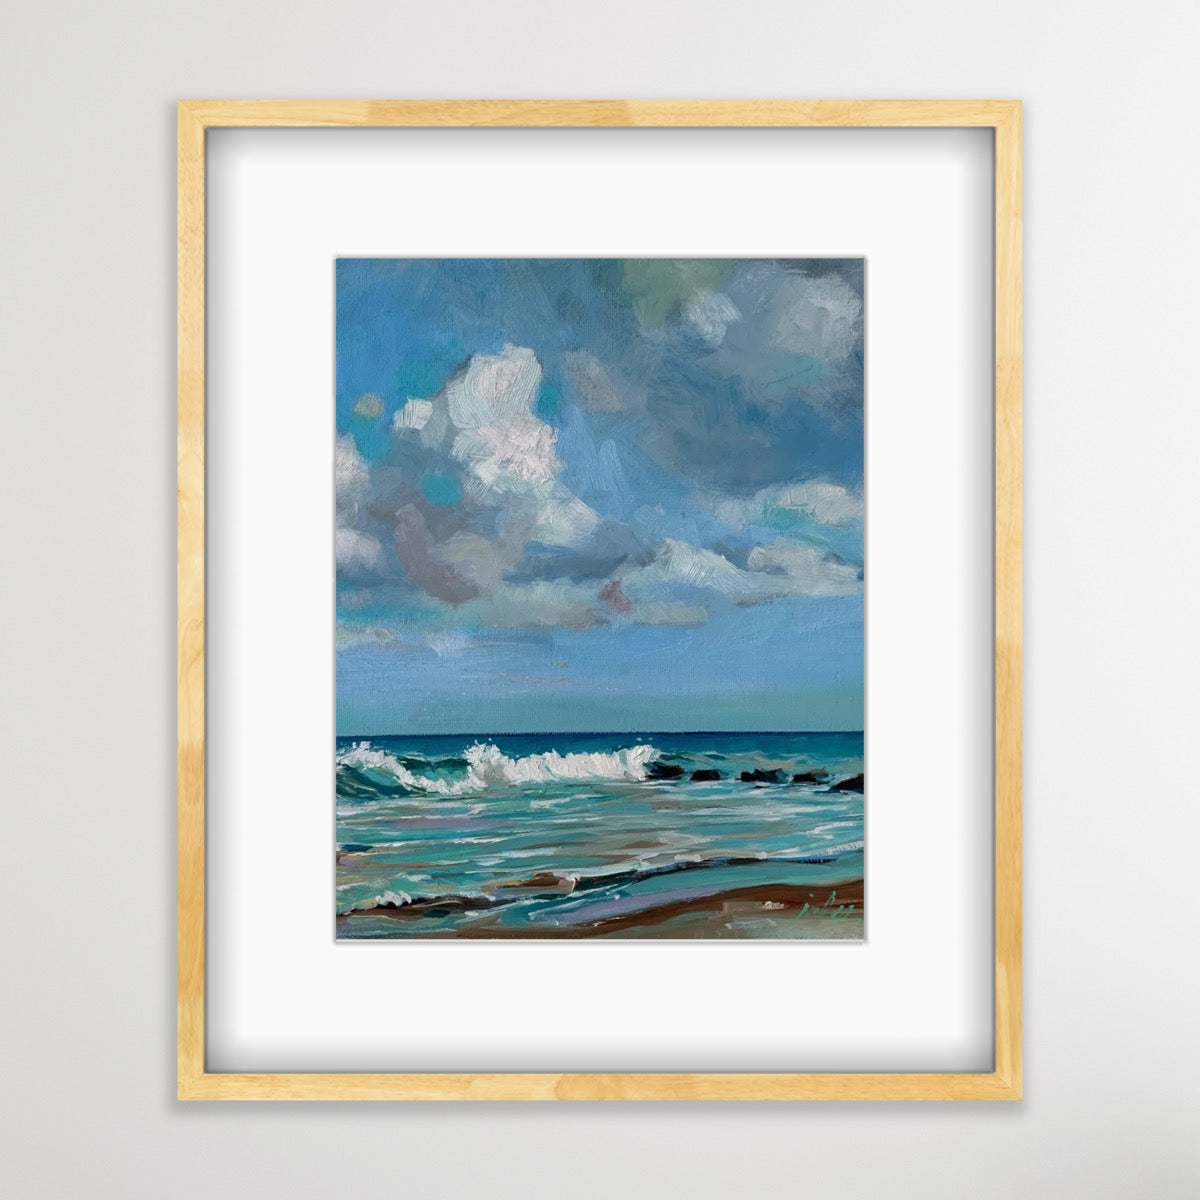 LA PUNTA - WEST CONDADO BEACH - Giclee Reproduction Print of Original Oil Painting